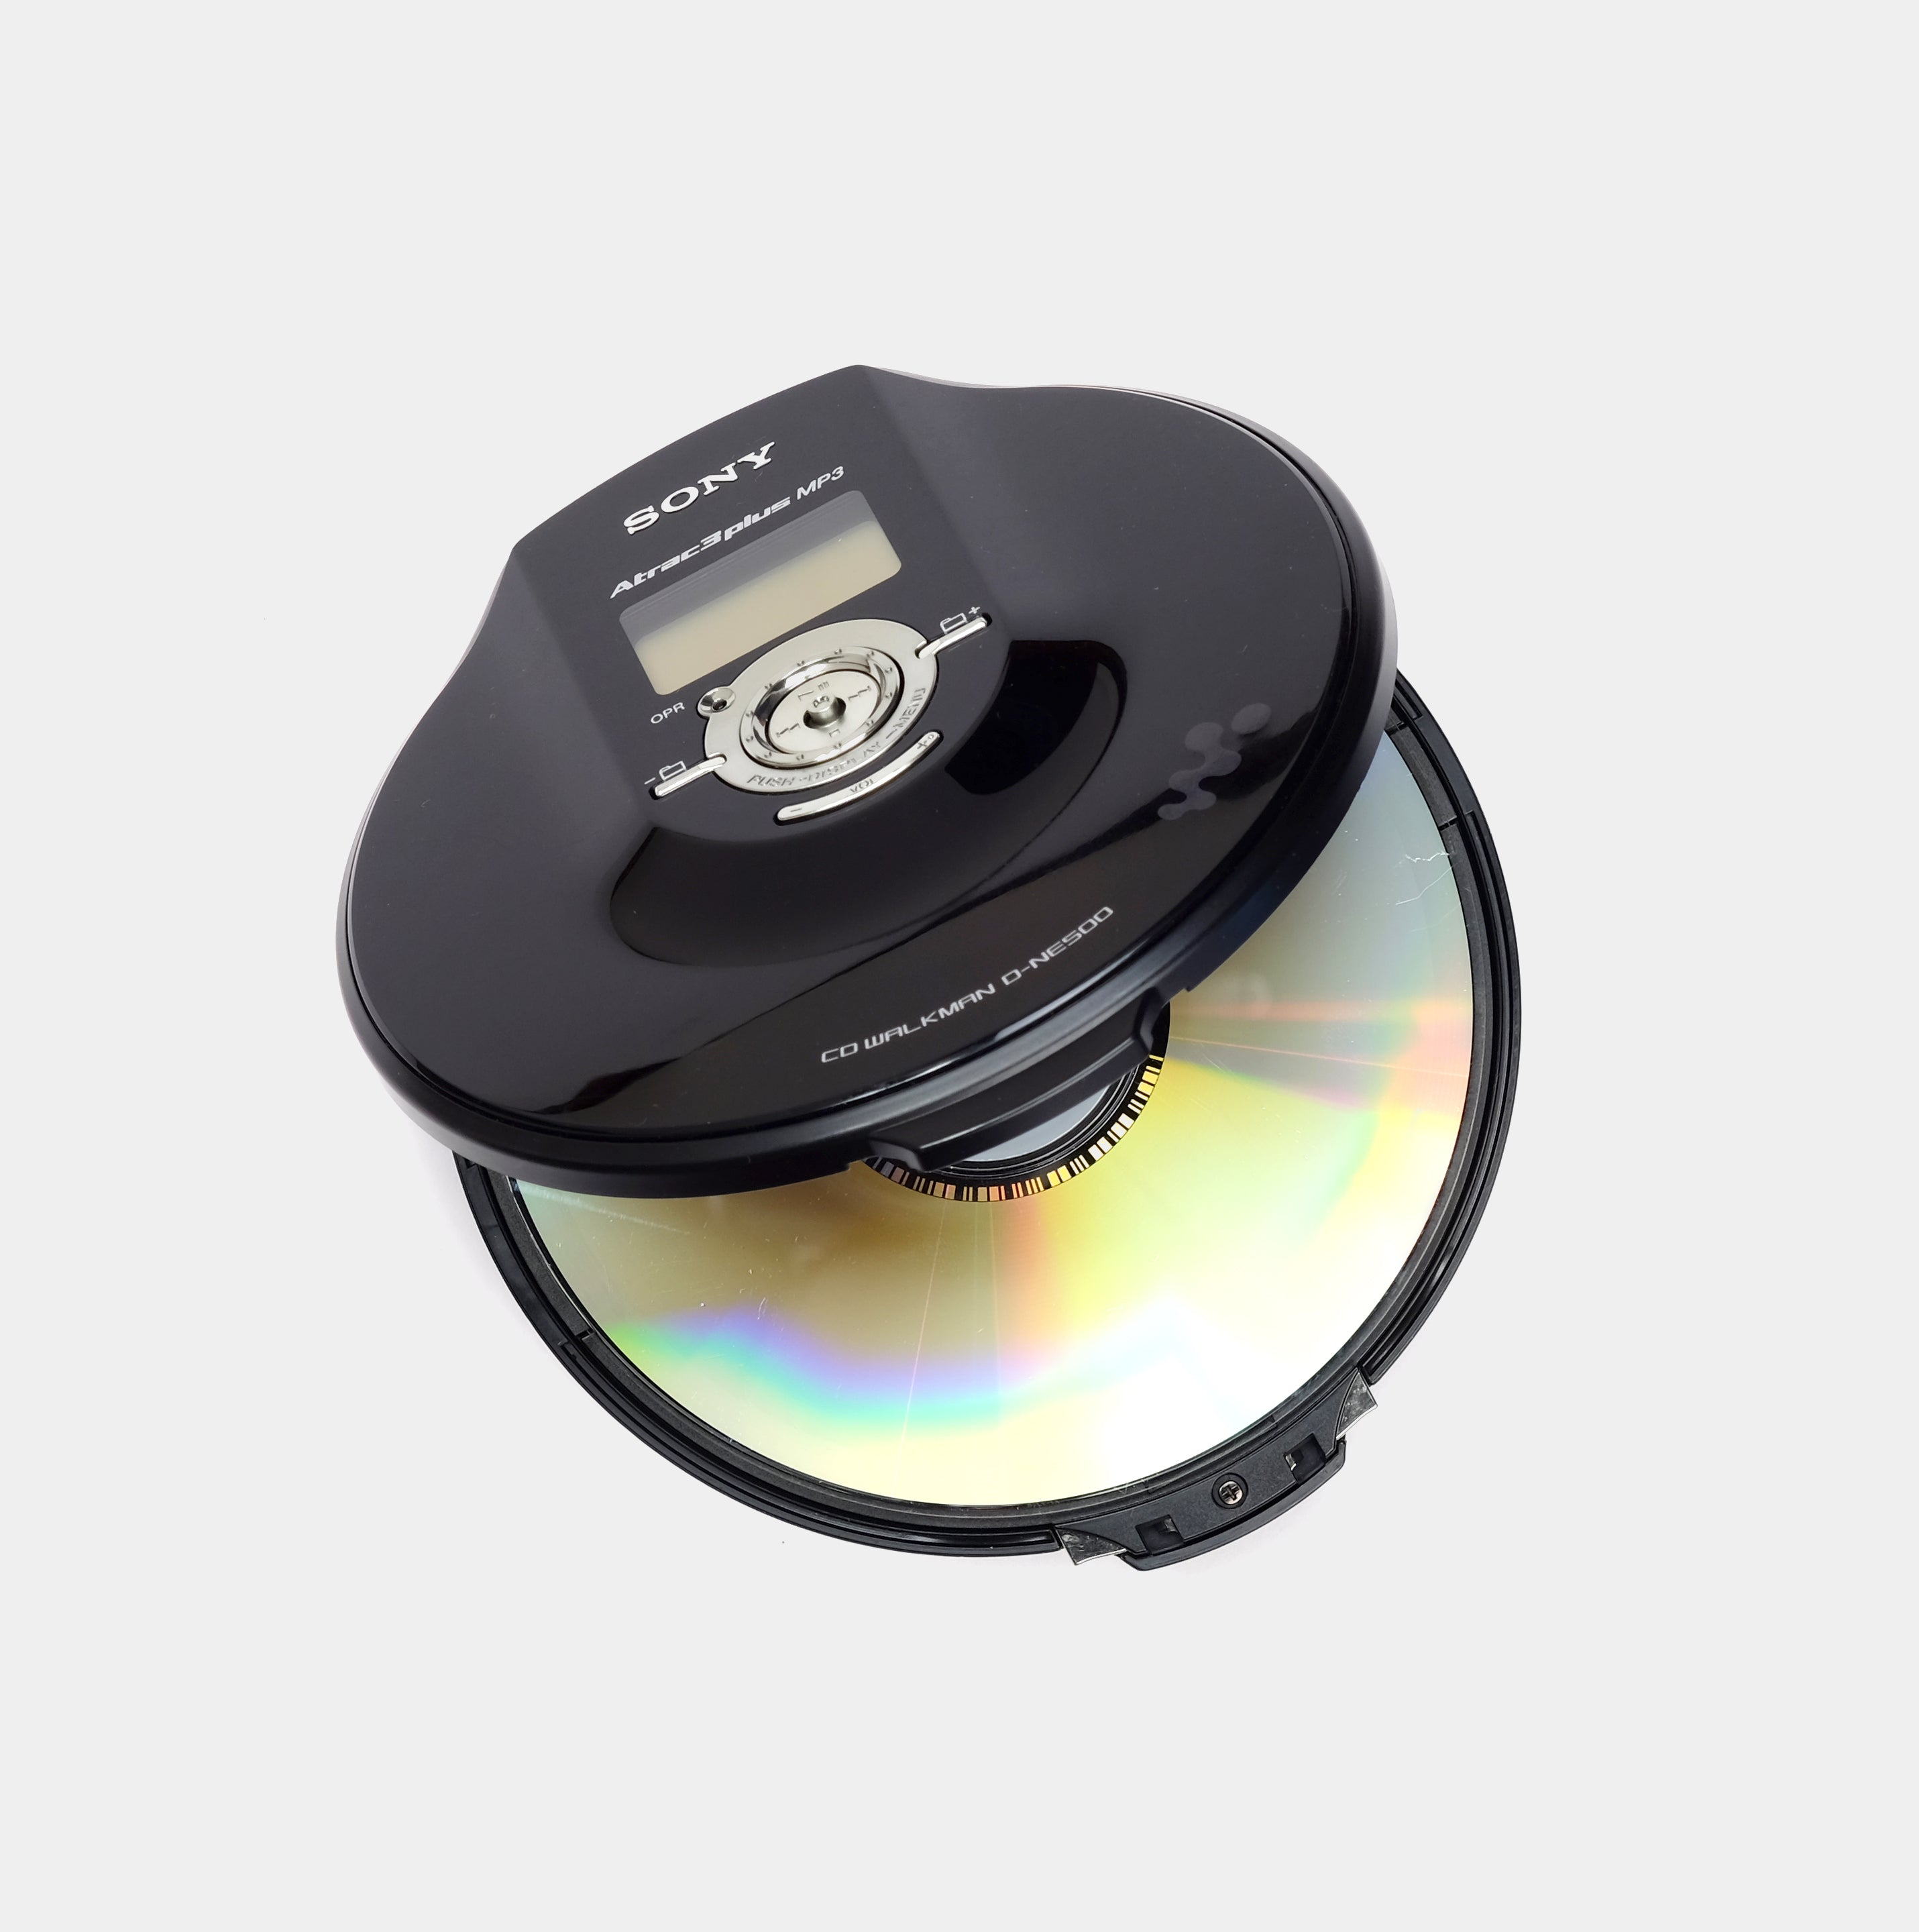 Sony D-NE500 Portable CD Player